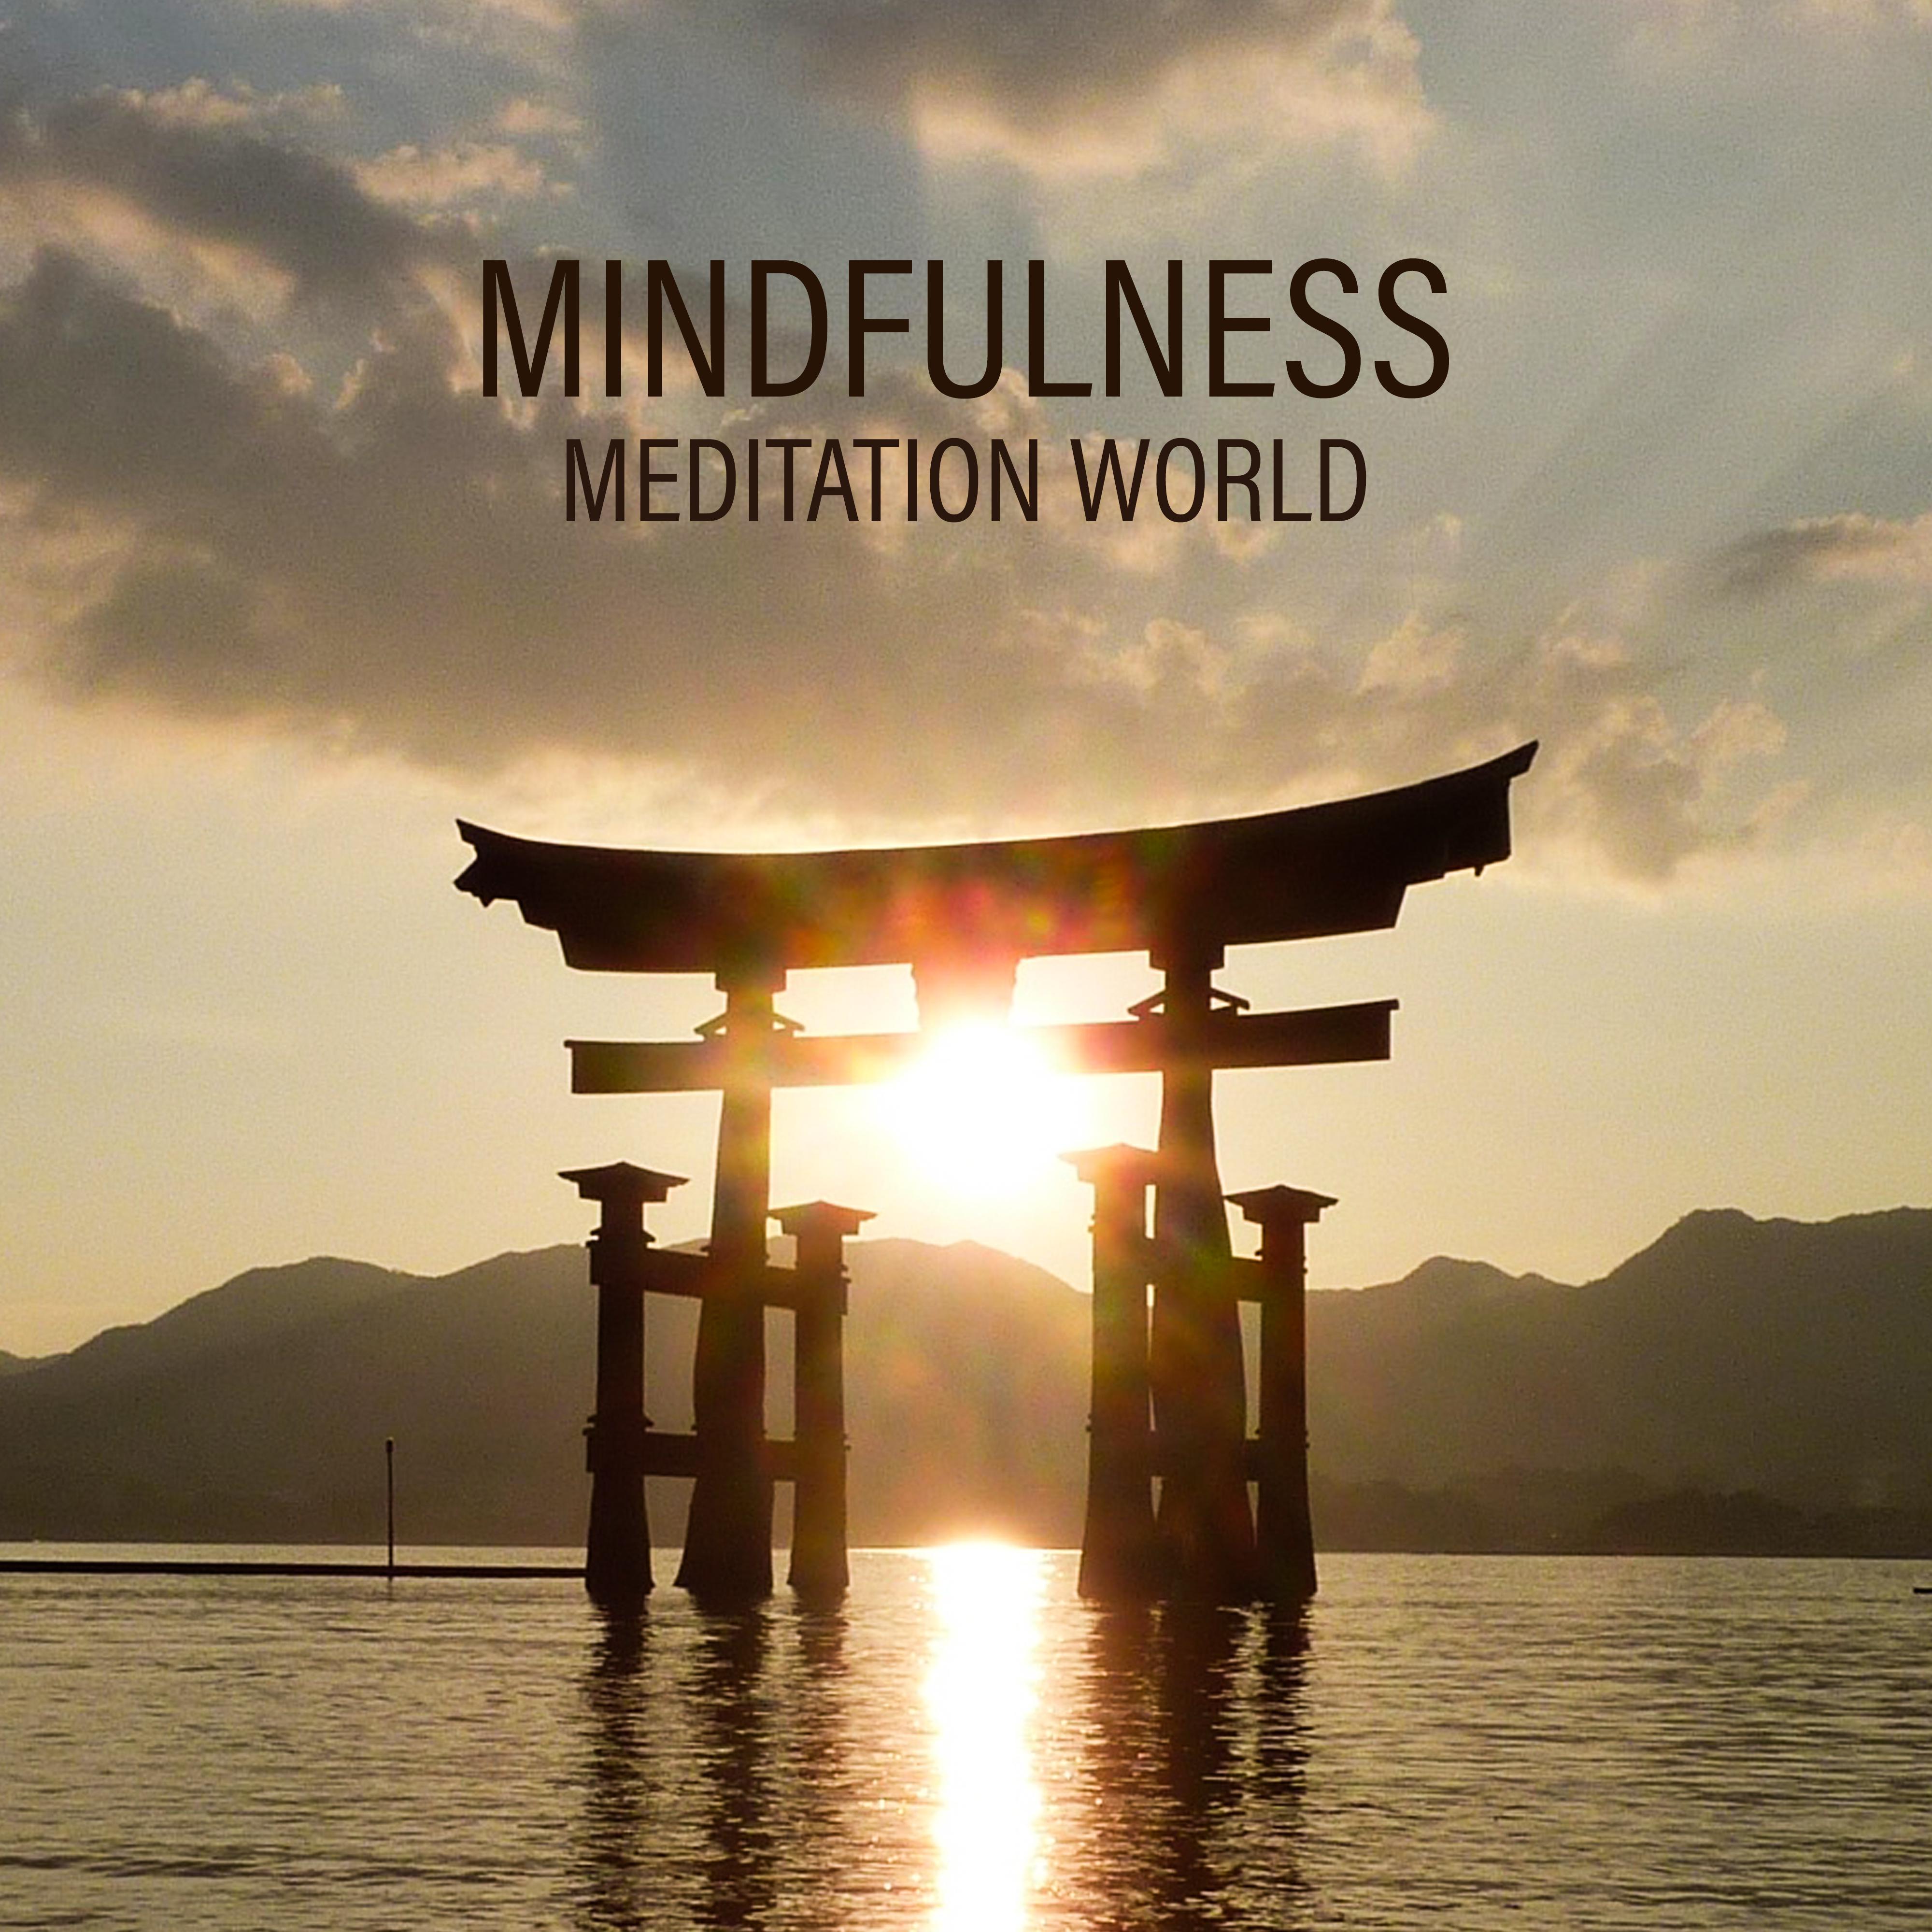 Mindfulness Meditation World